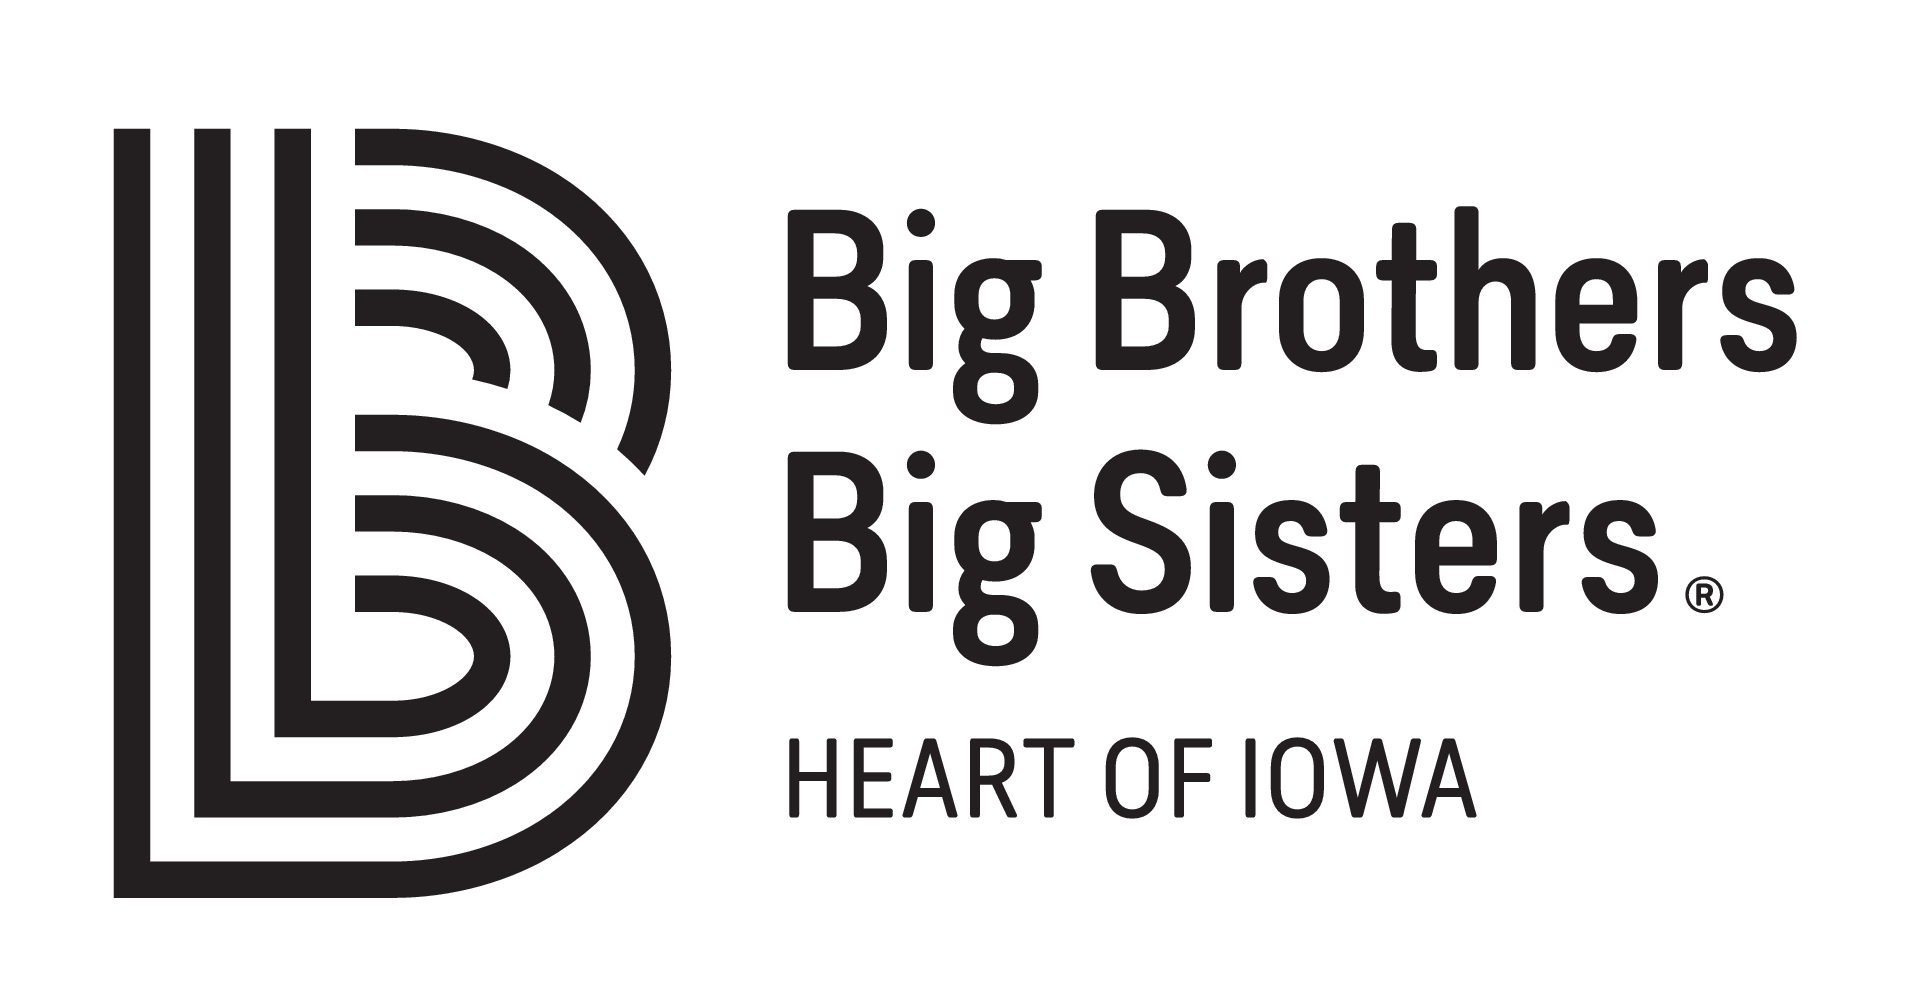 Heart of Iowa Big Brothers Big Sisters logo